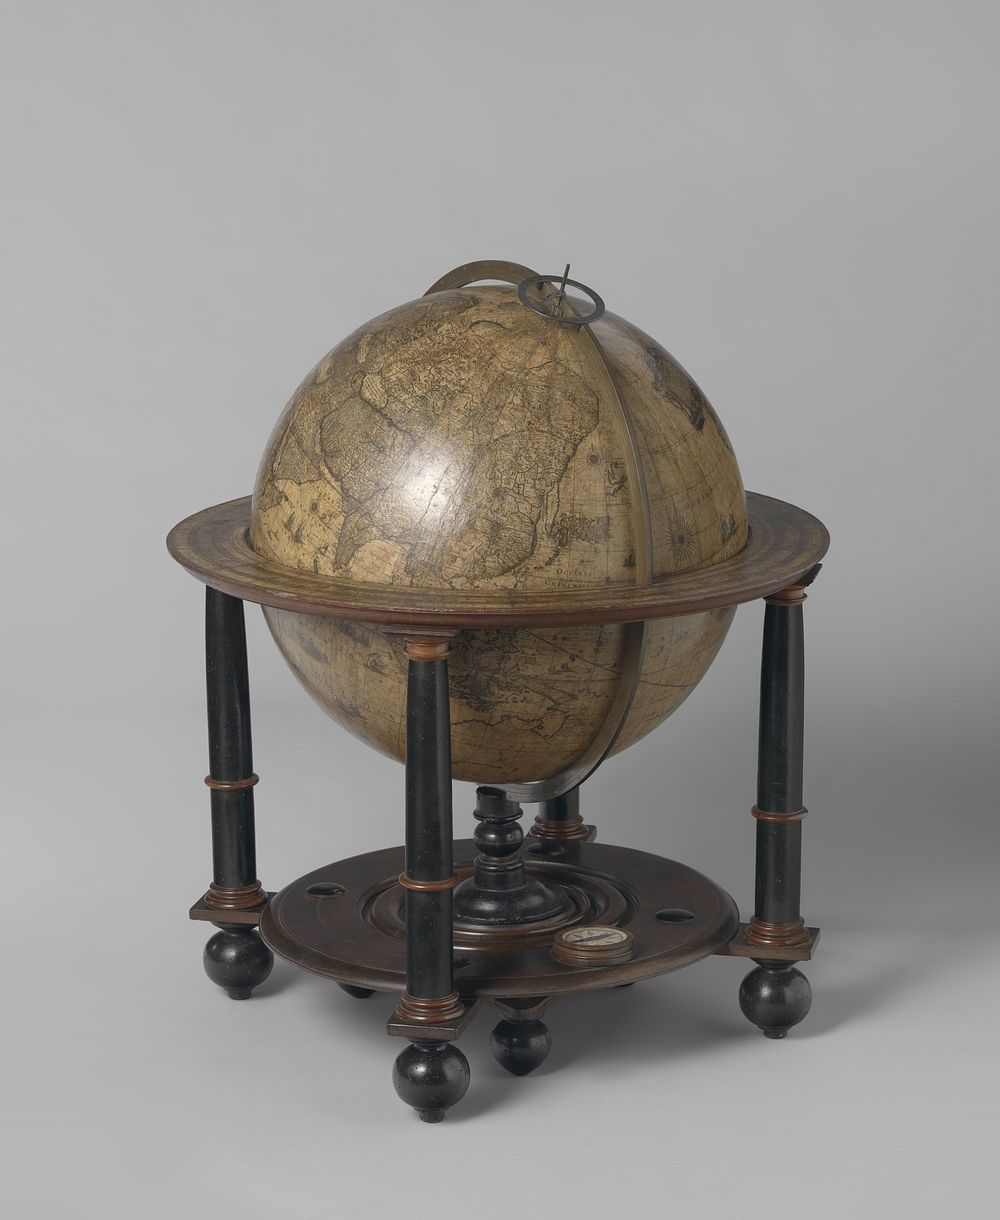 Terrestrial globe (1645 - 1648) by Willem Janszoon Blaeu and Johannes Willemszoon Blaeu